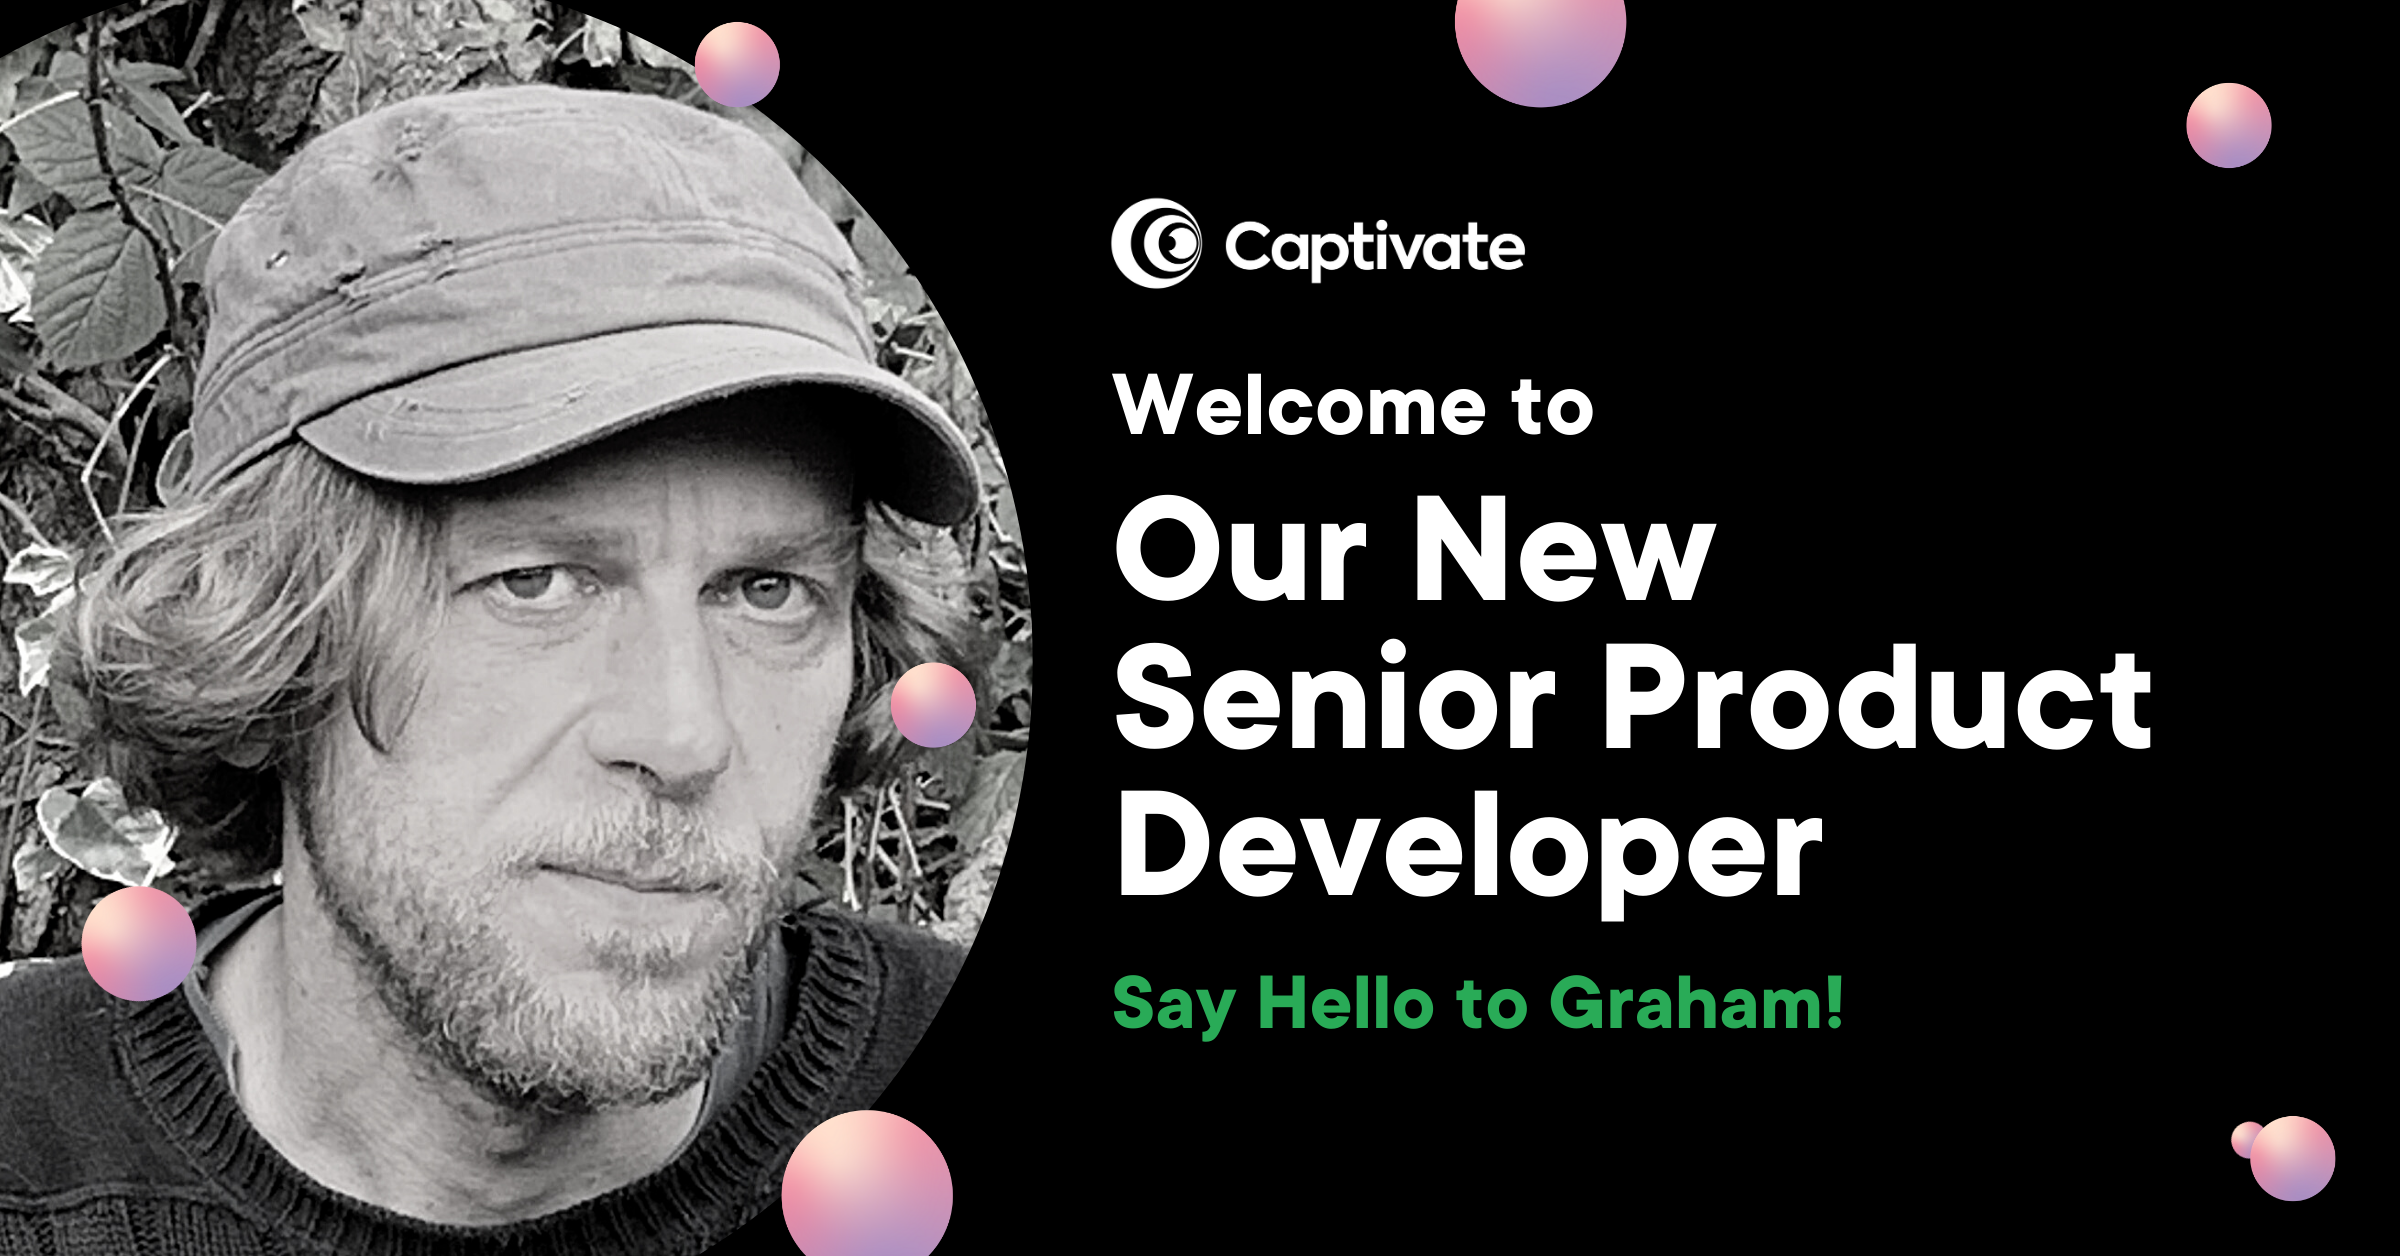 Say Hello to Graham